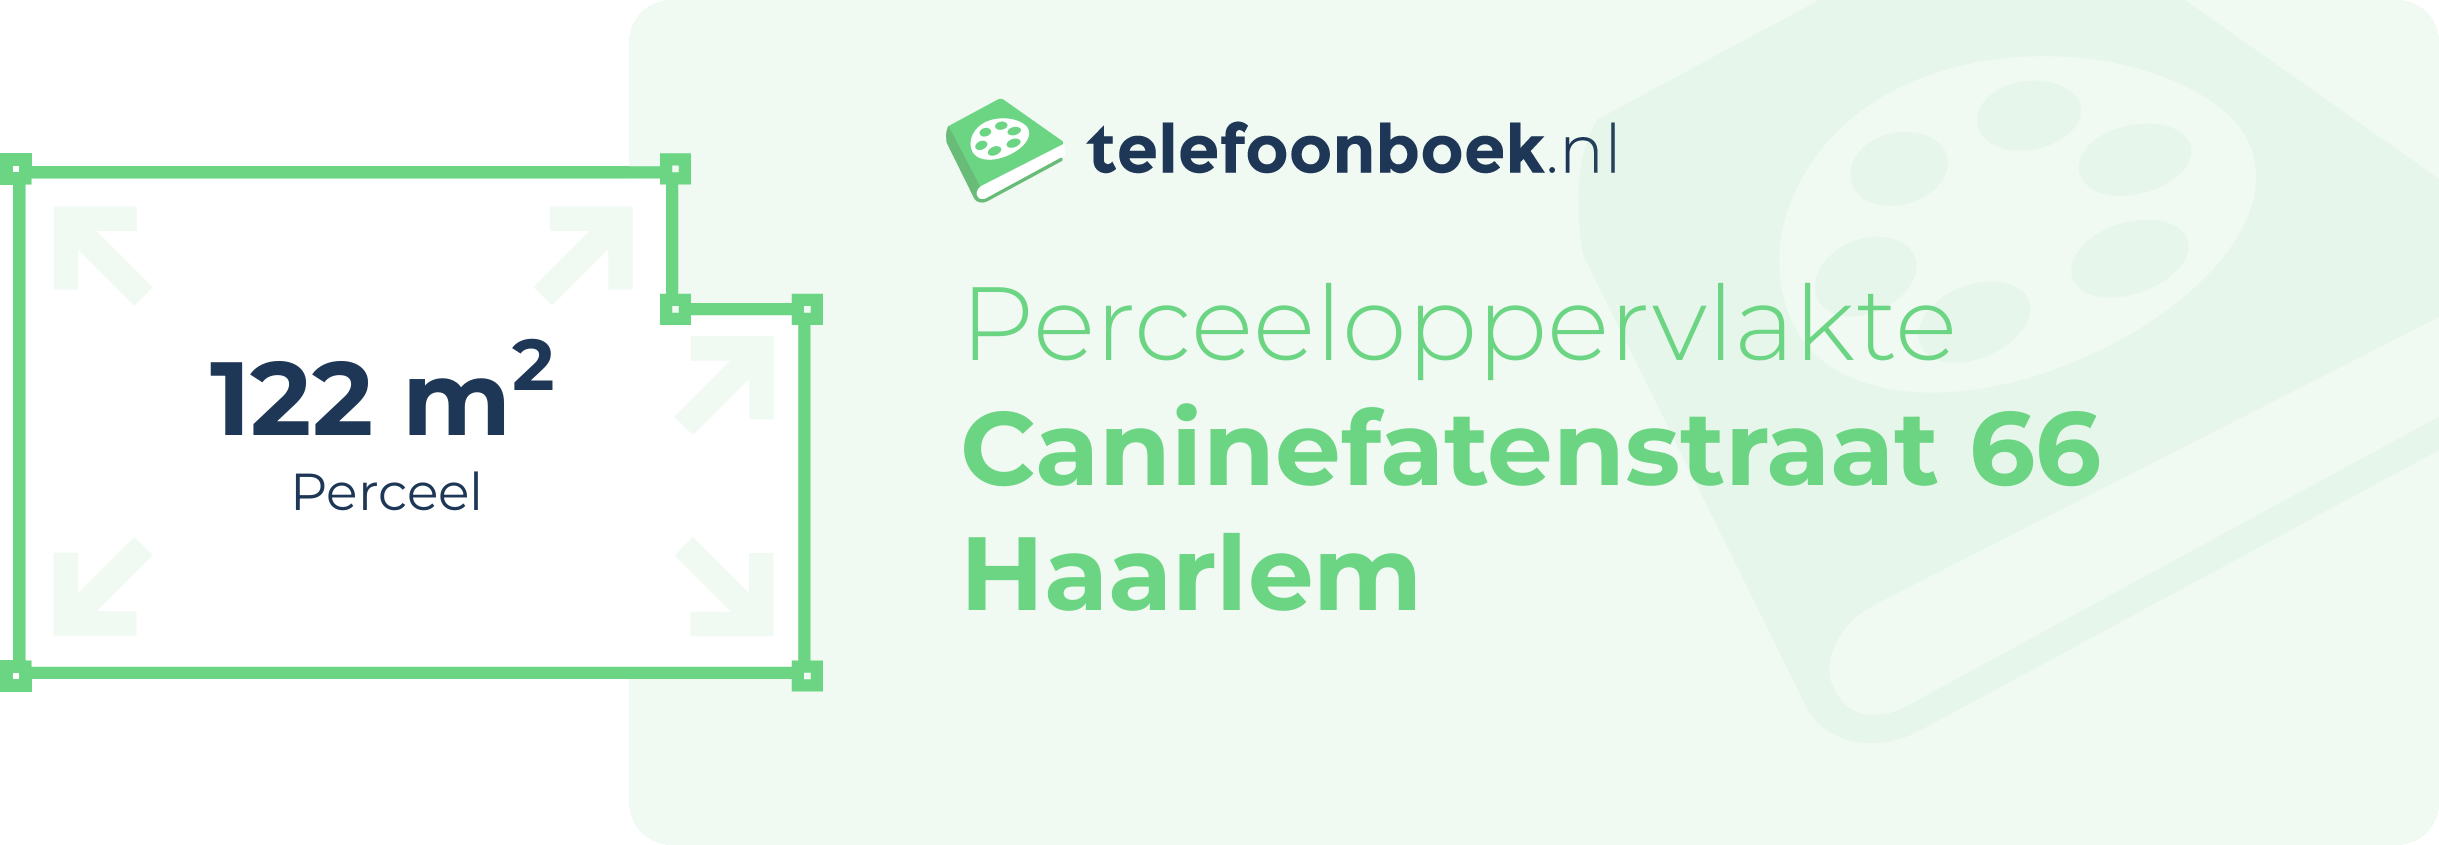 Perceeloppervlakte Caninefatenstraat 66 Haarlem